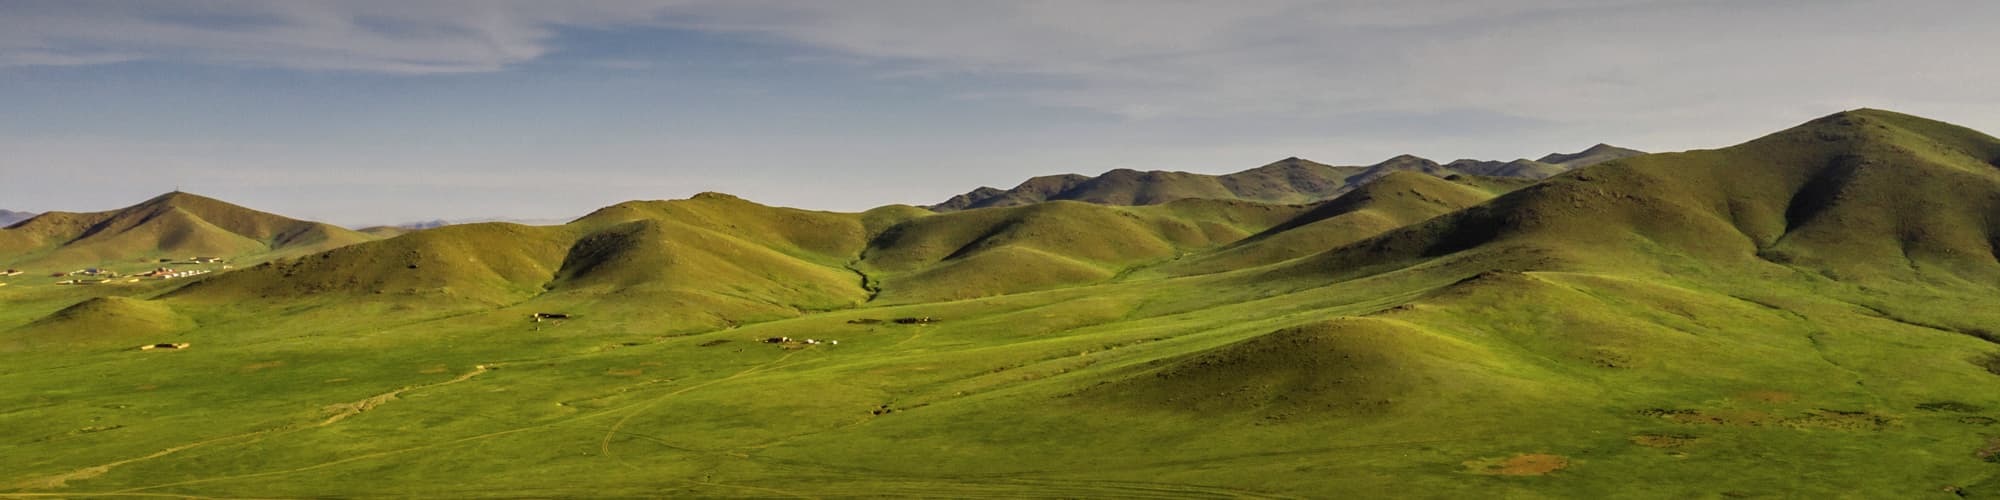 Découverte Mongolie © Travel Stock / Adobe Stock